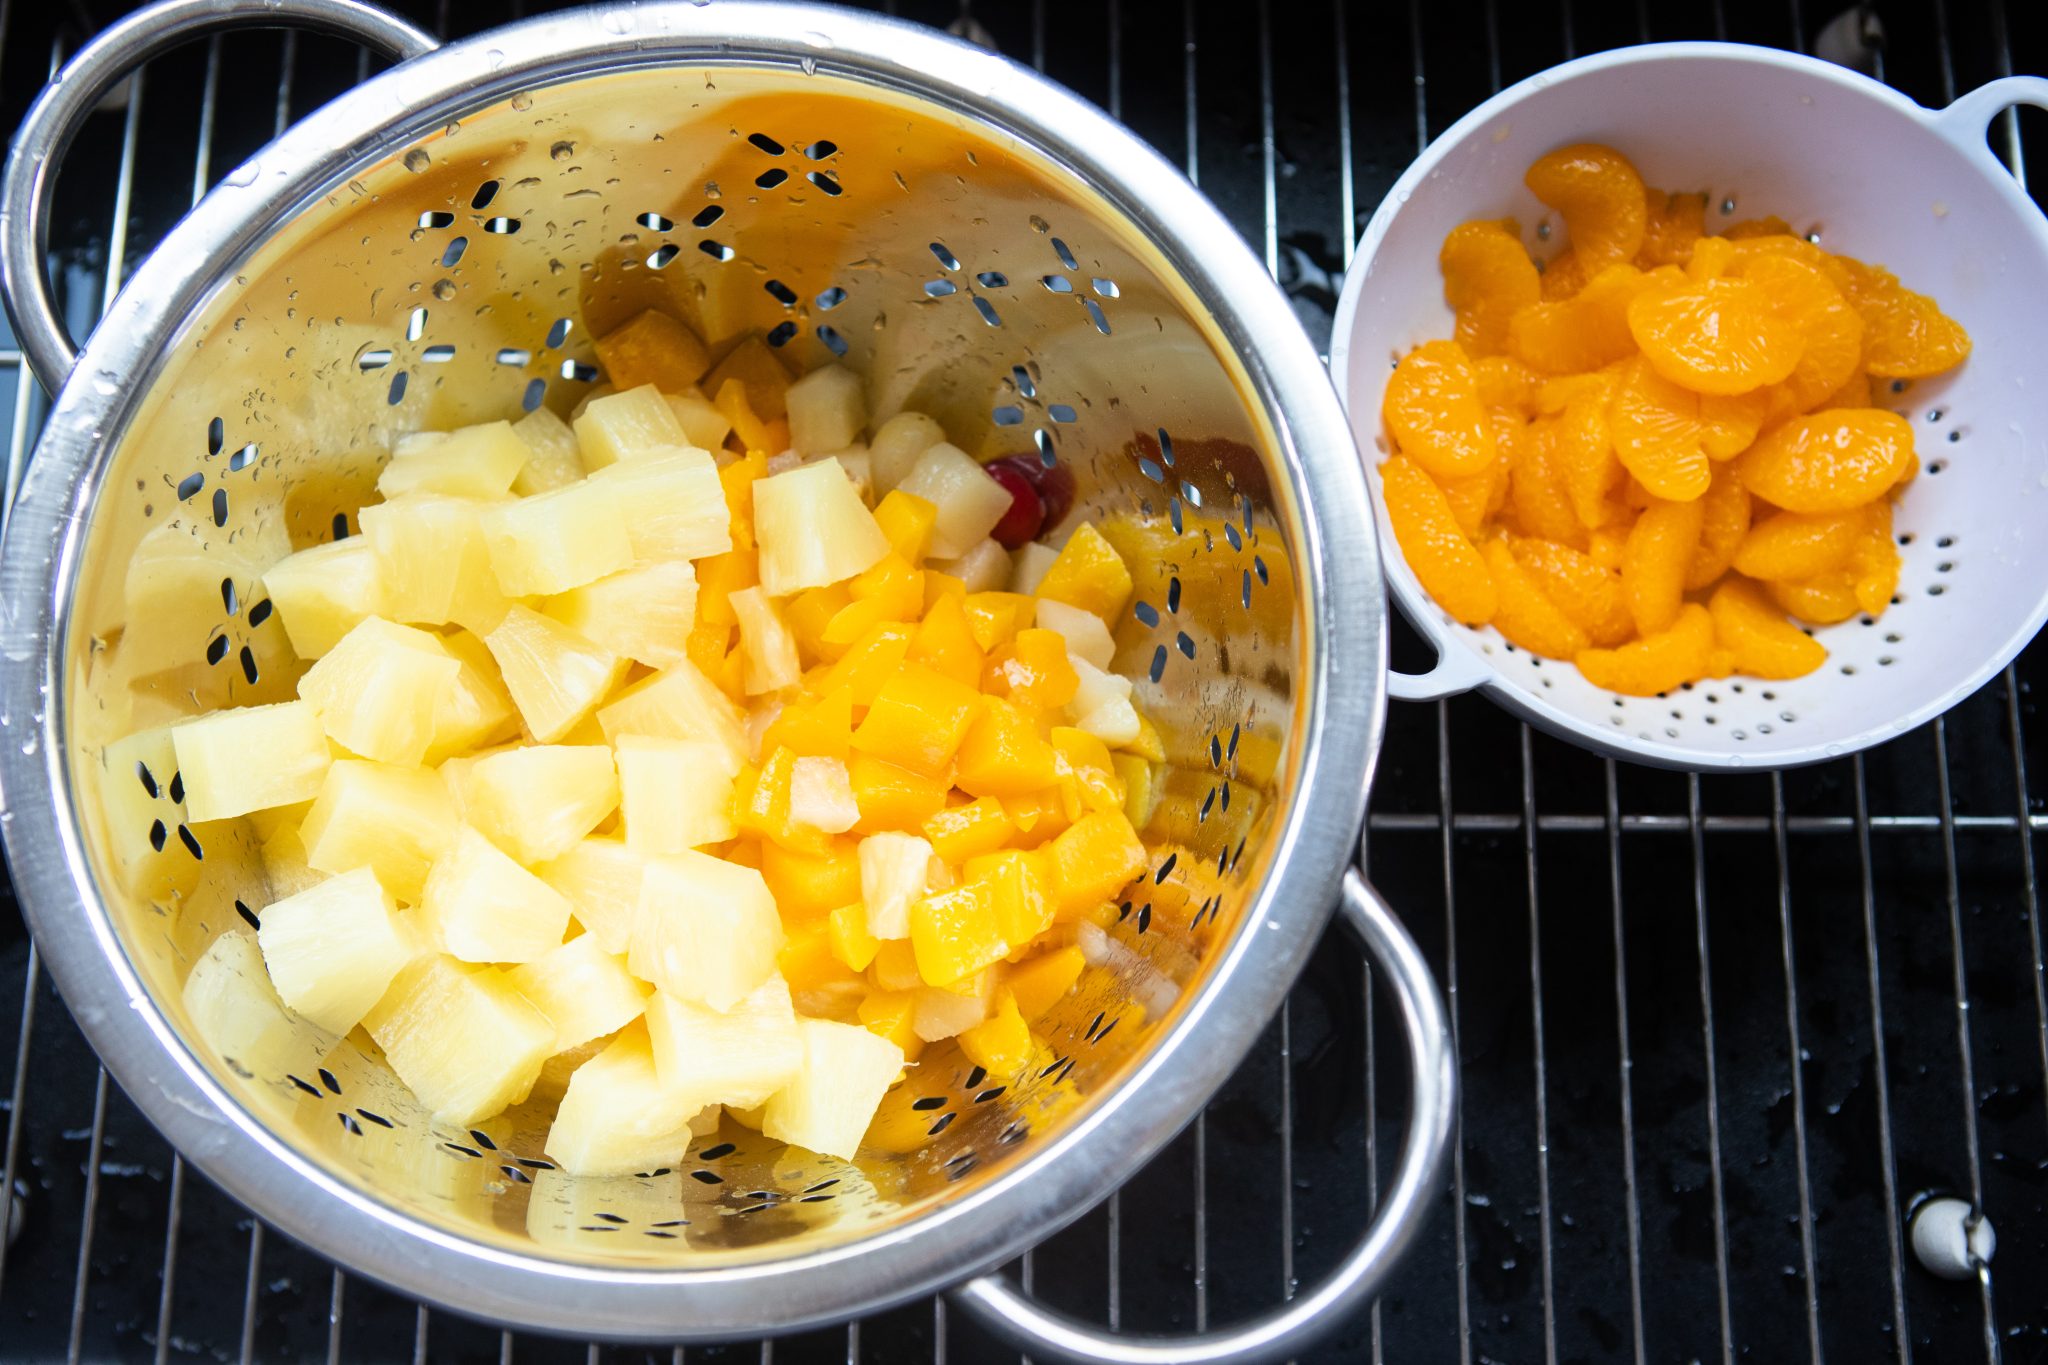 canned fruit salad and mandarin oranges in strainer over sink